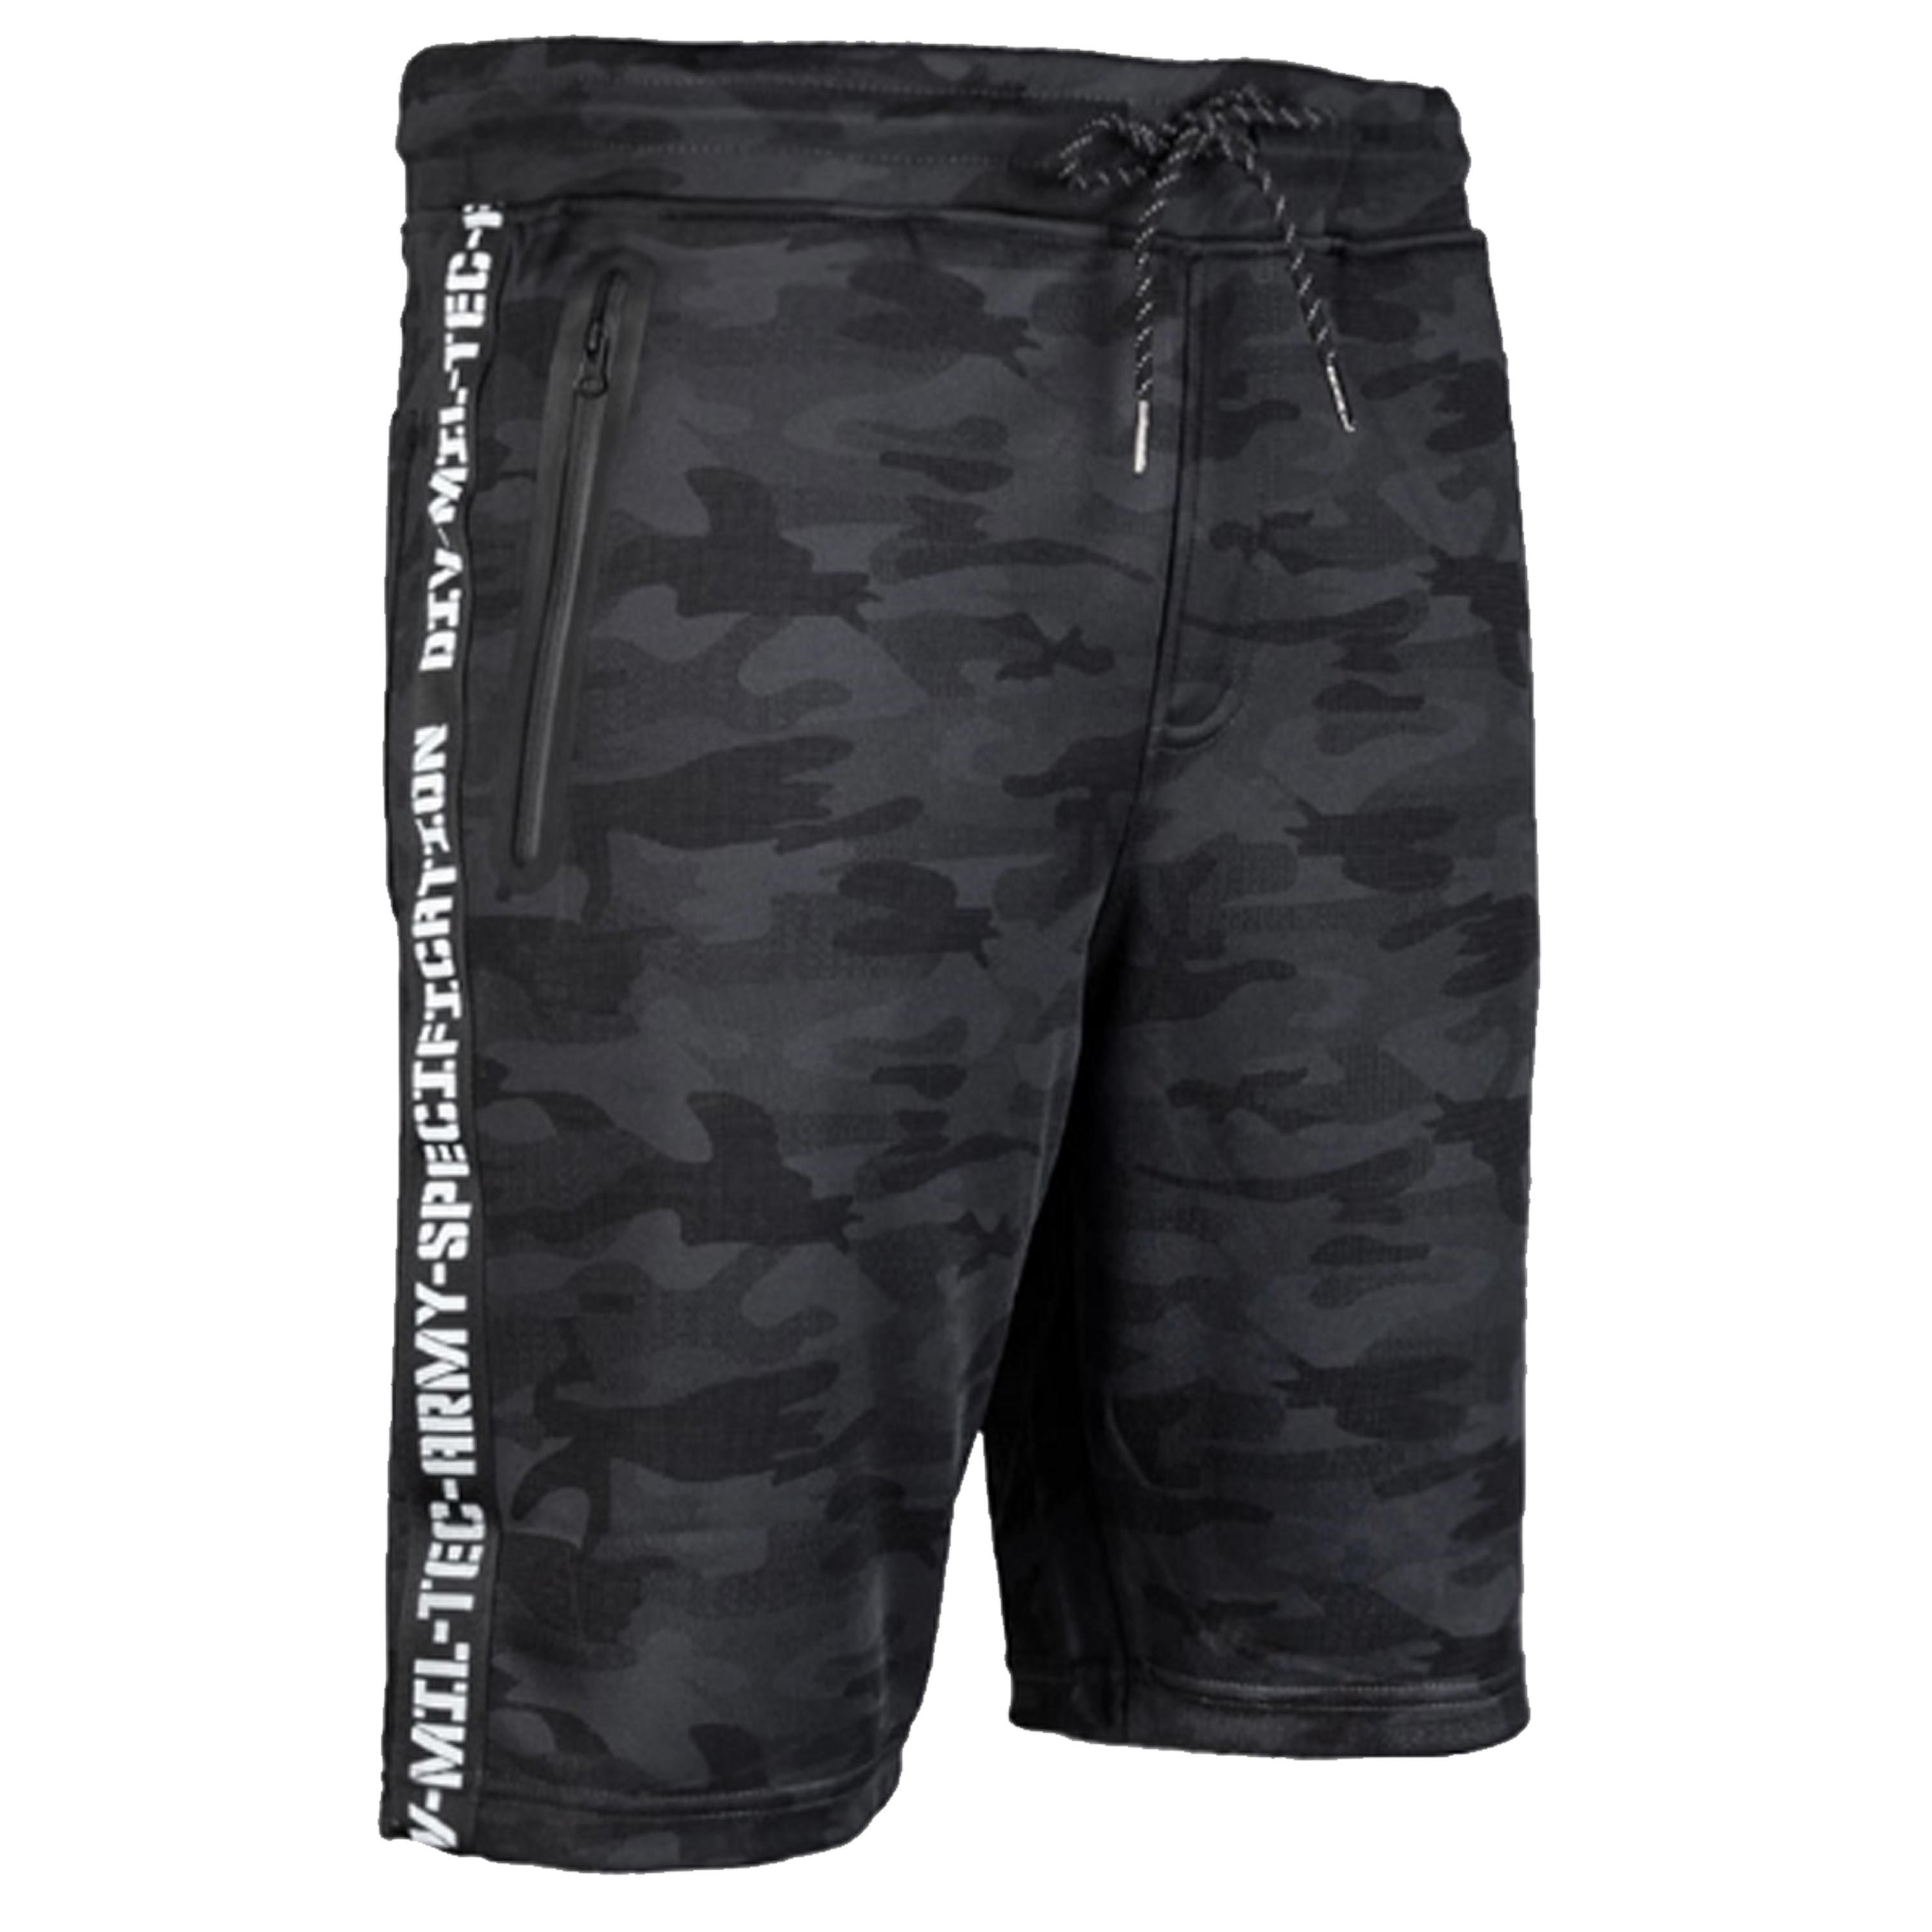 Purchase the Mil-Tec Trainings Shorts dark camo by ASMC